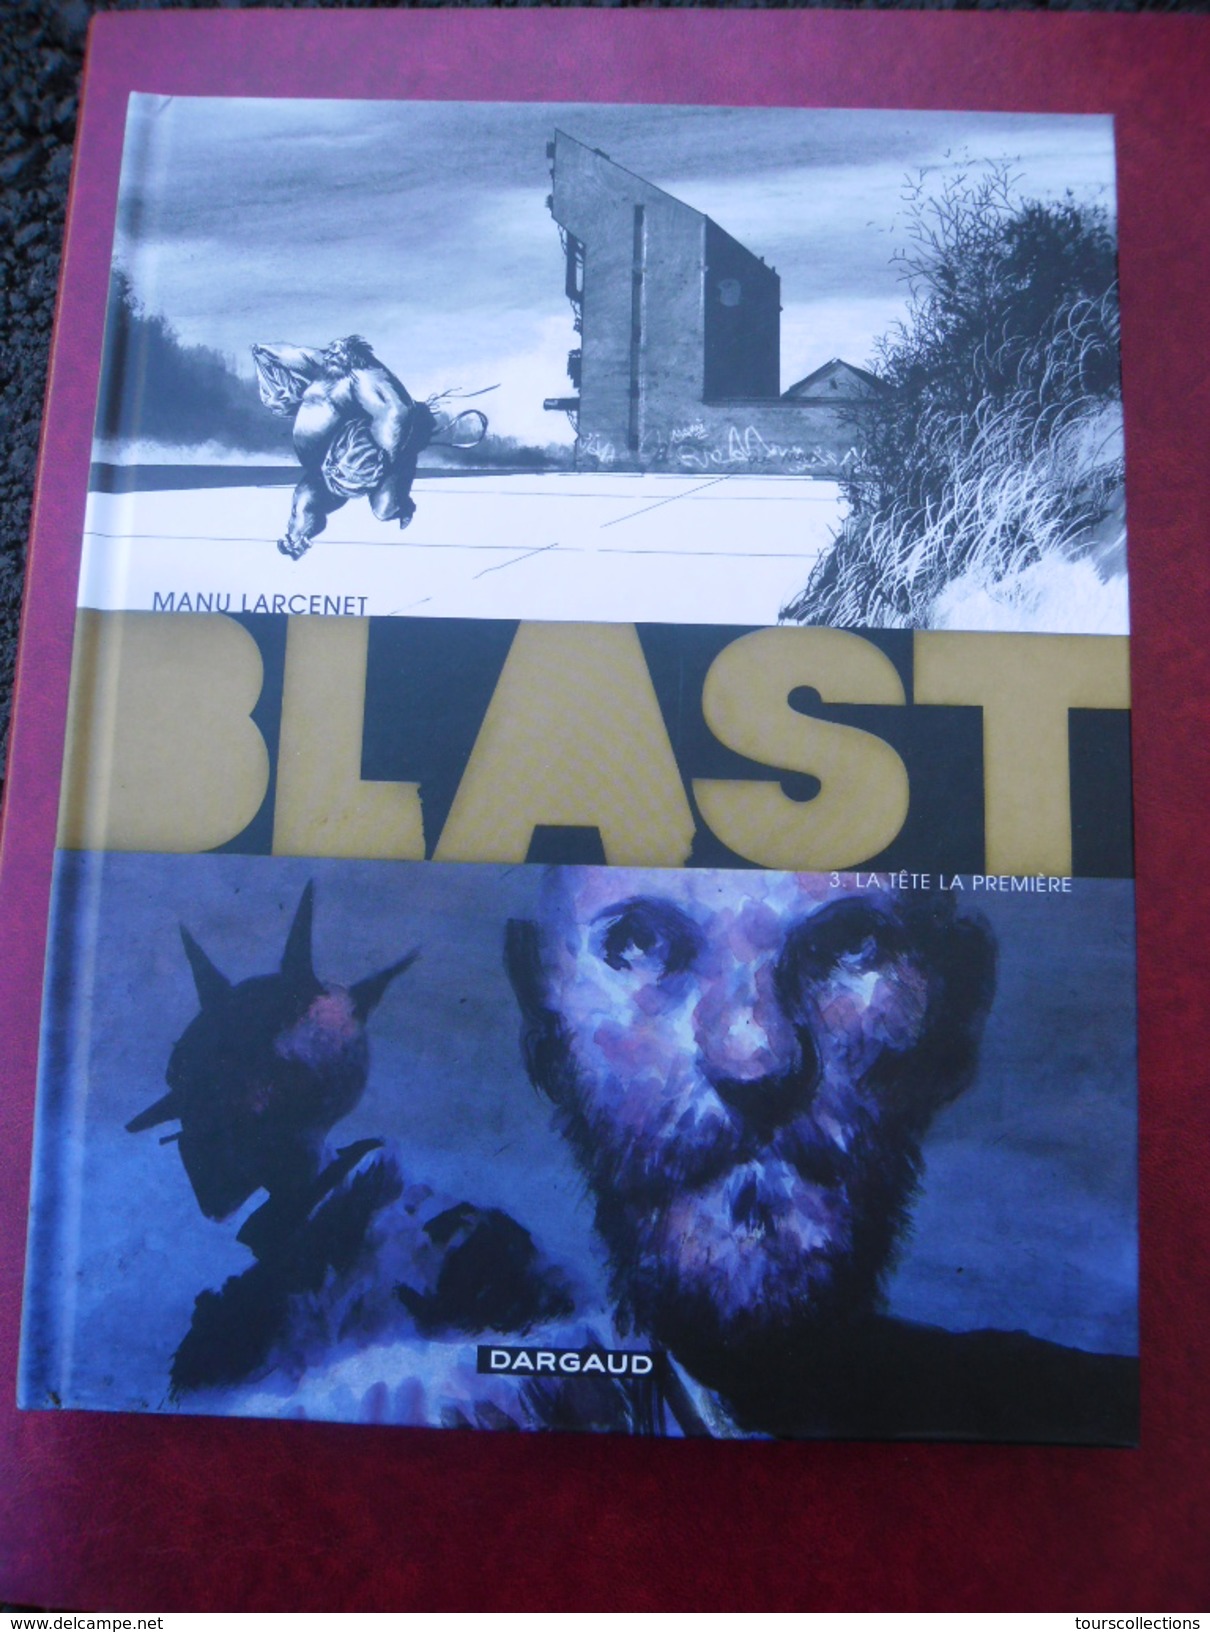 LOT des 4 BD série BLAST de Manu Larcenet Edition Dargaud @ état neuf jamais lu @ Tomes 1,2,3 et 4